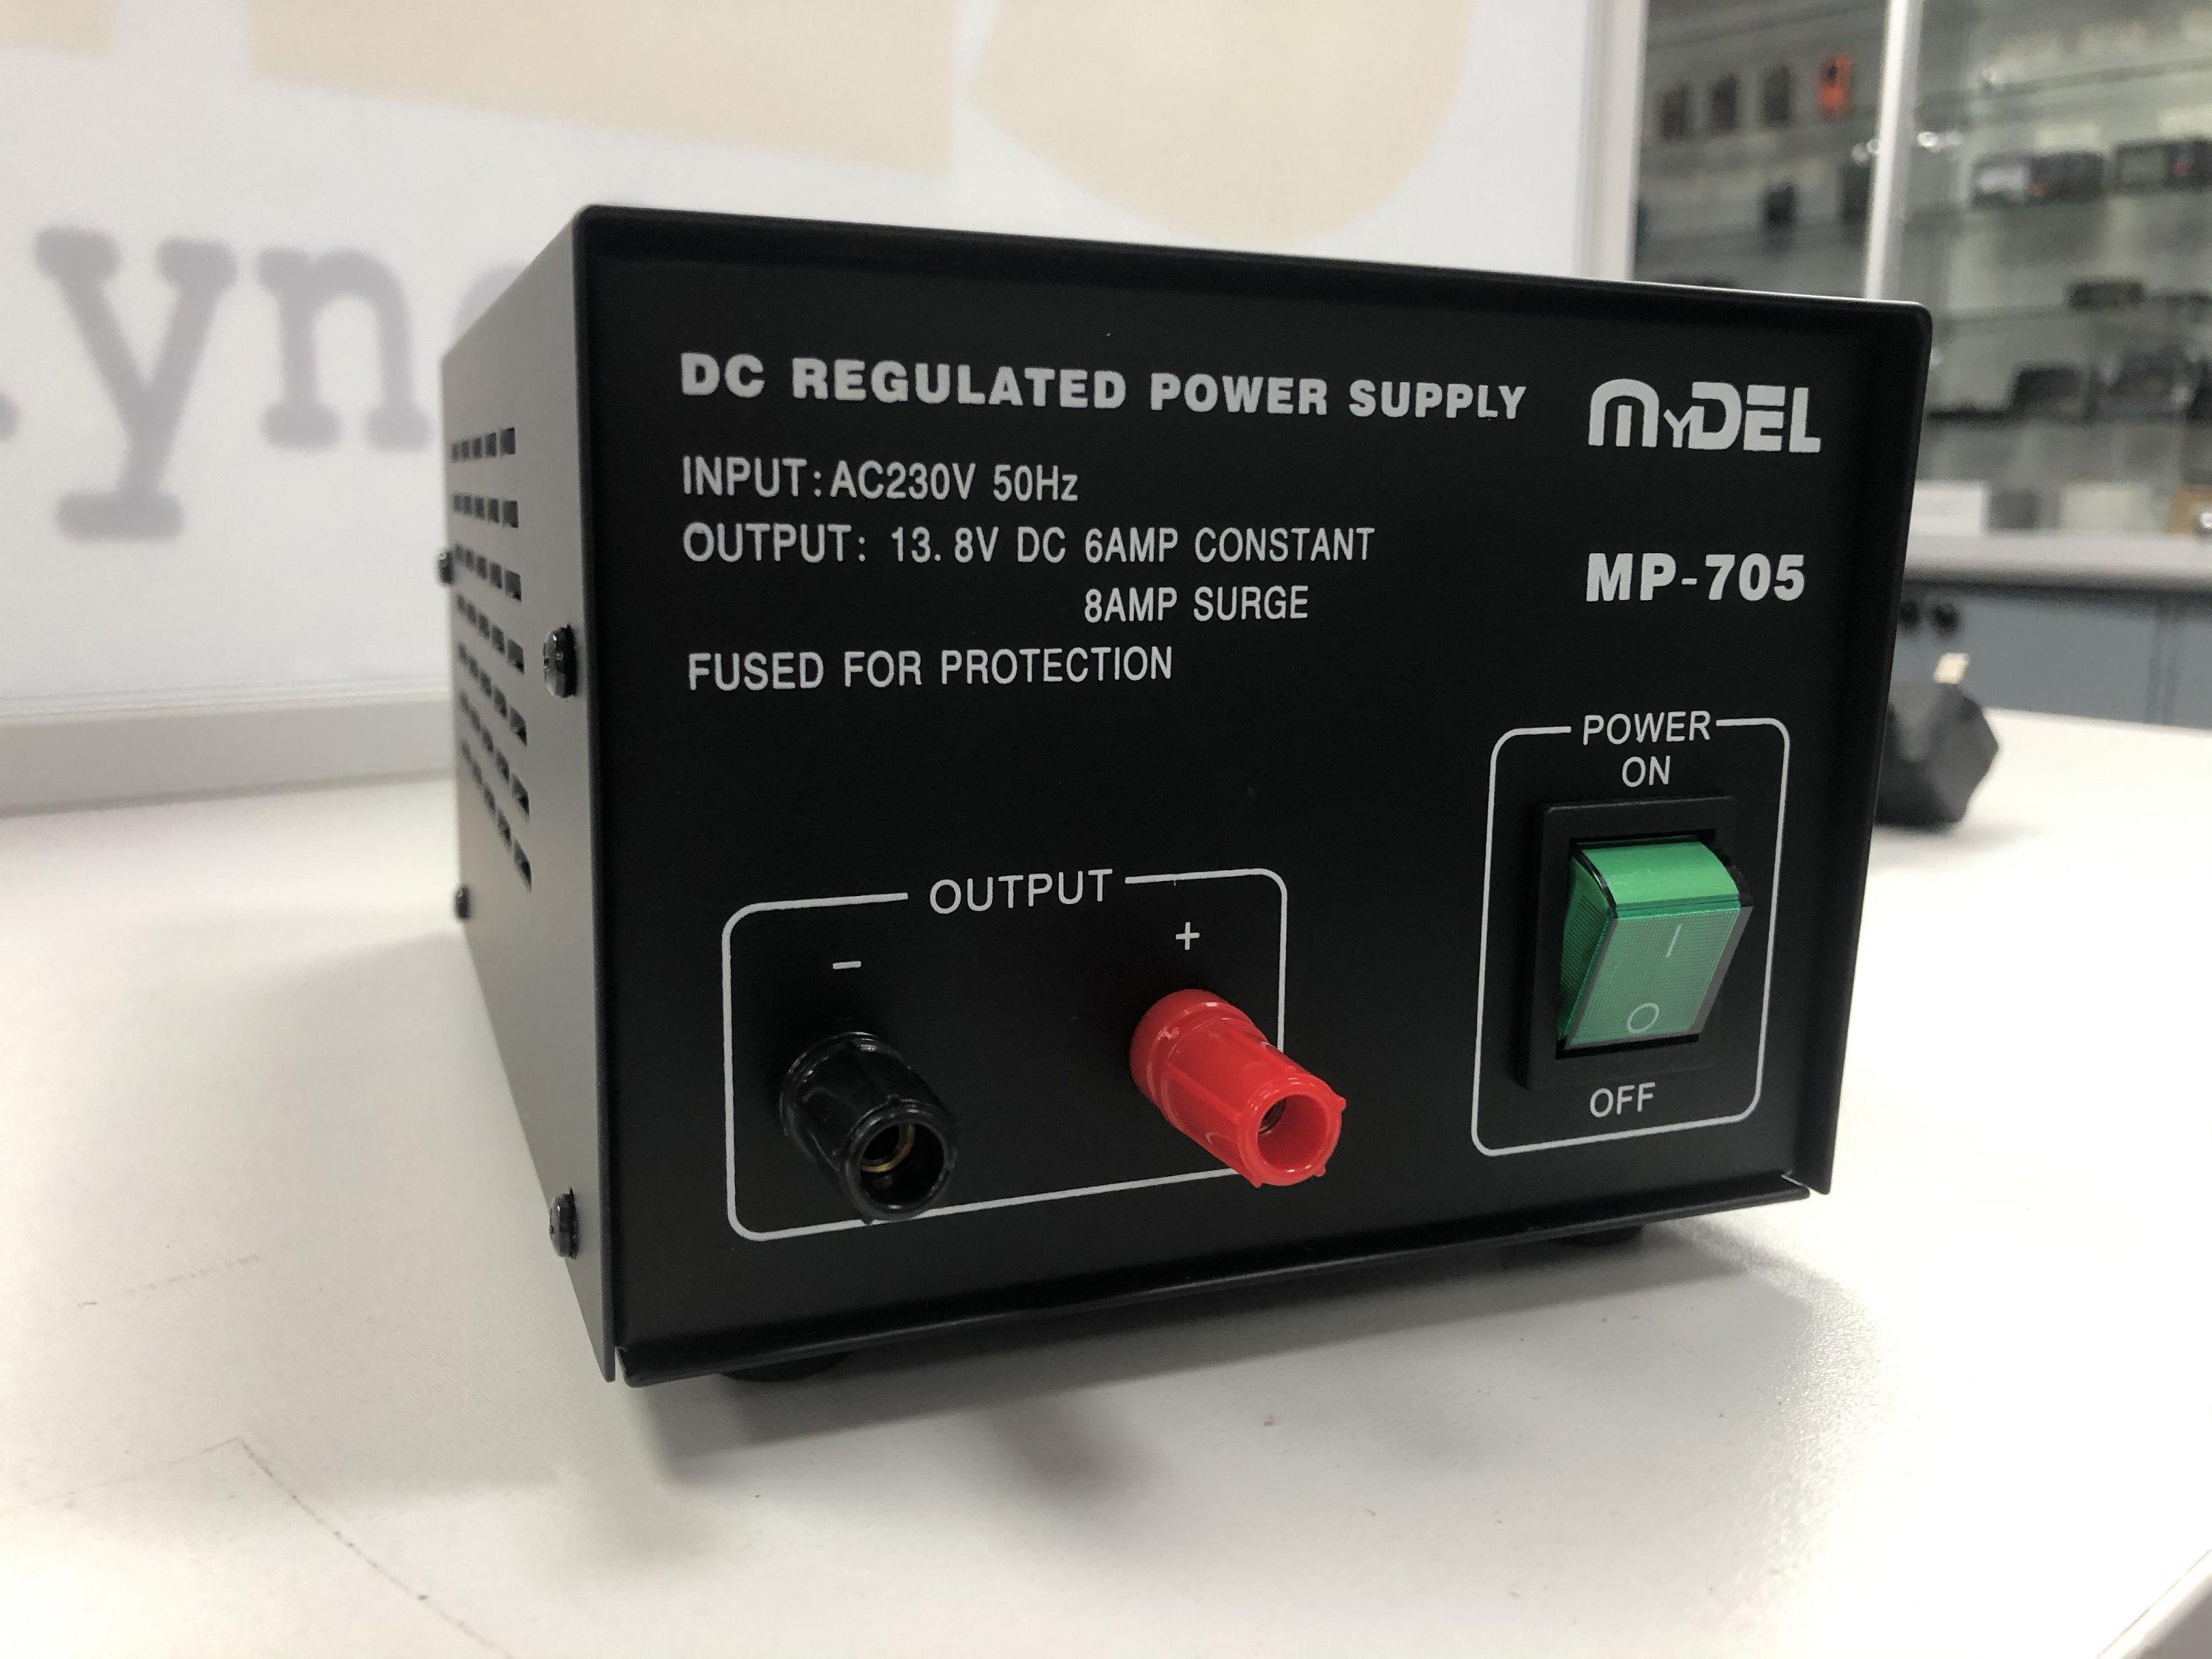 MyDEL MP-705 Linear Power Supply s1